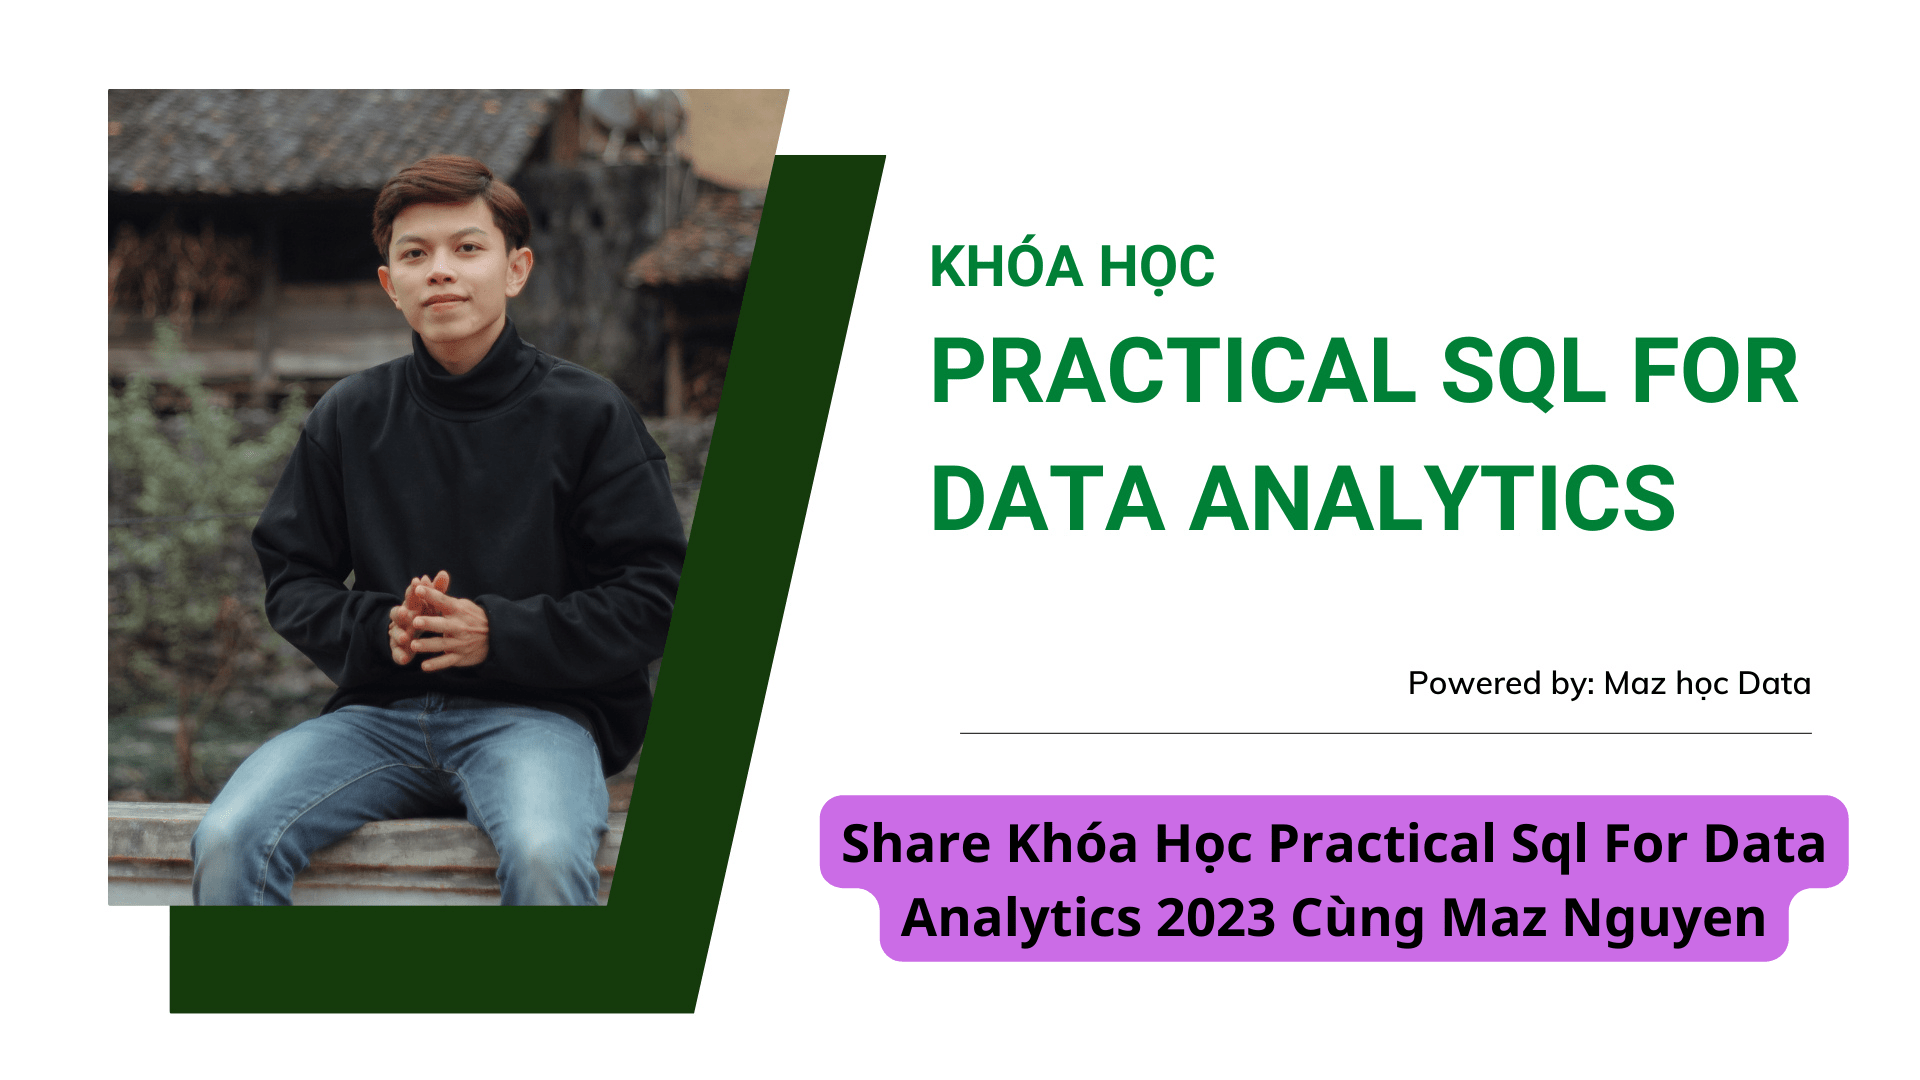 Share Khóa Học Practical Sql For Data Analytics 2023 Cùng Maz Nguyen